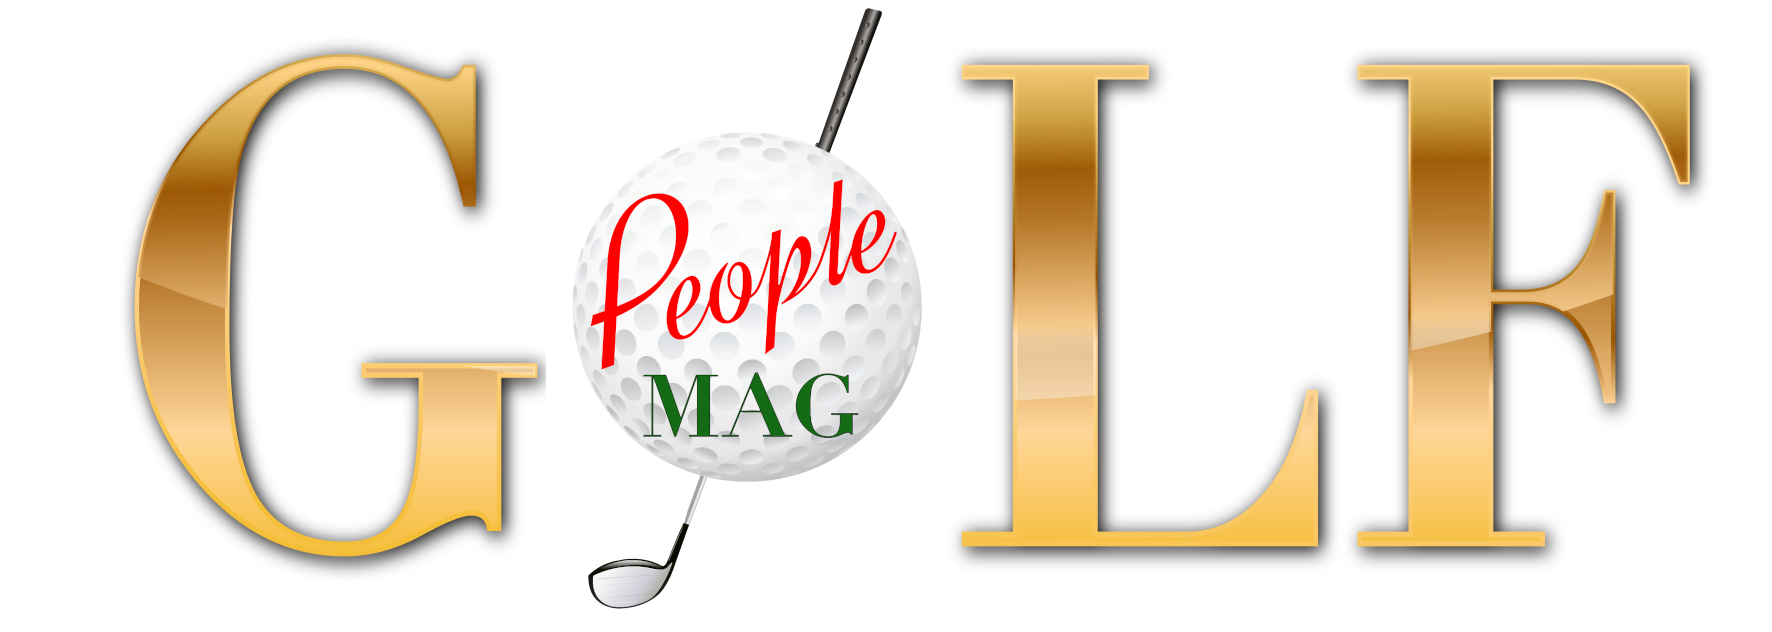 Logo-Golf-5